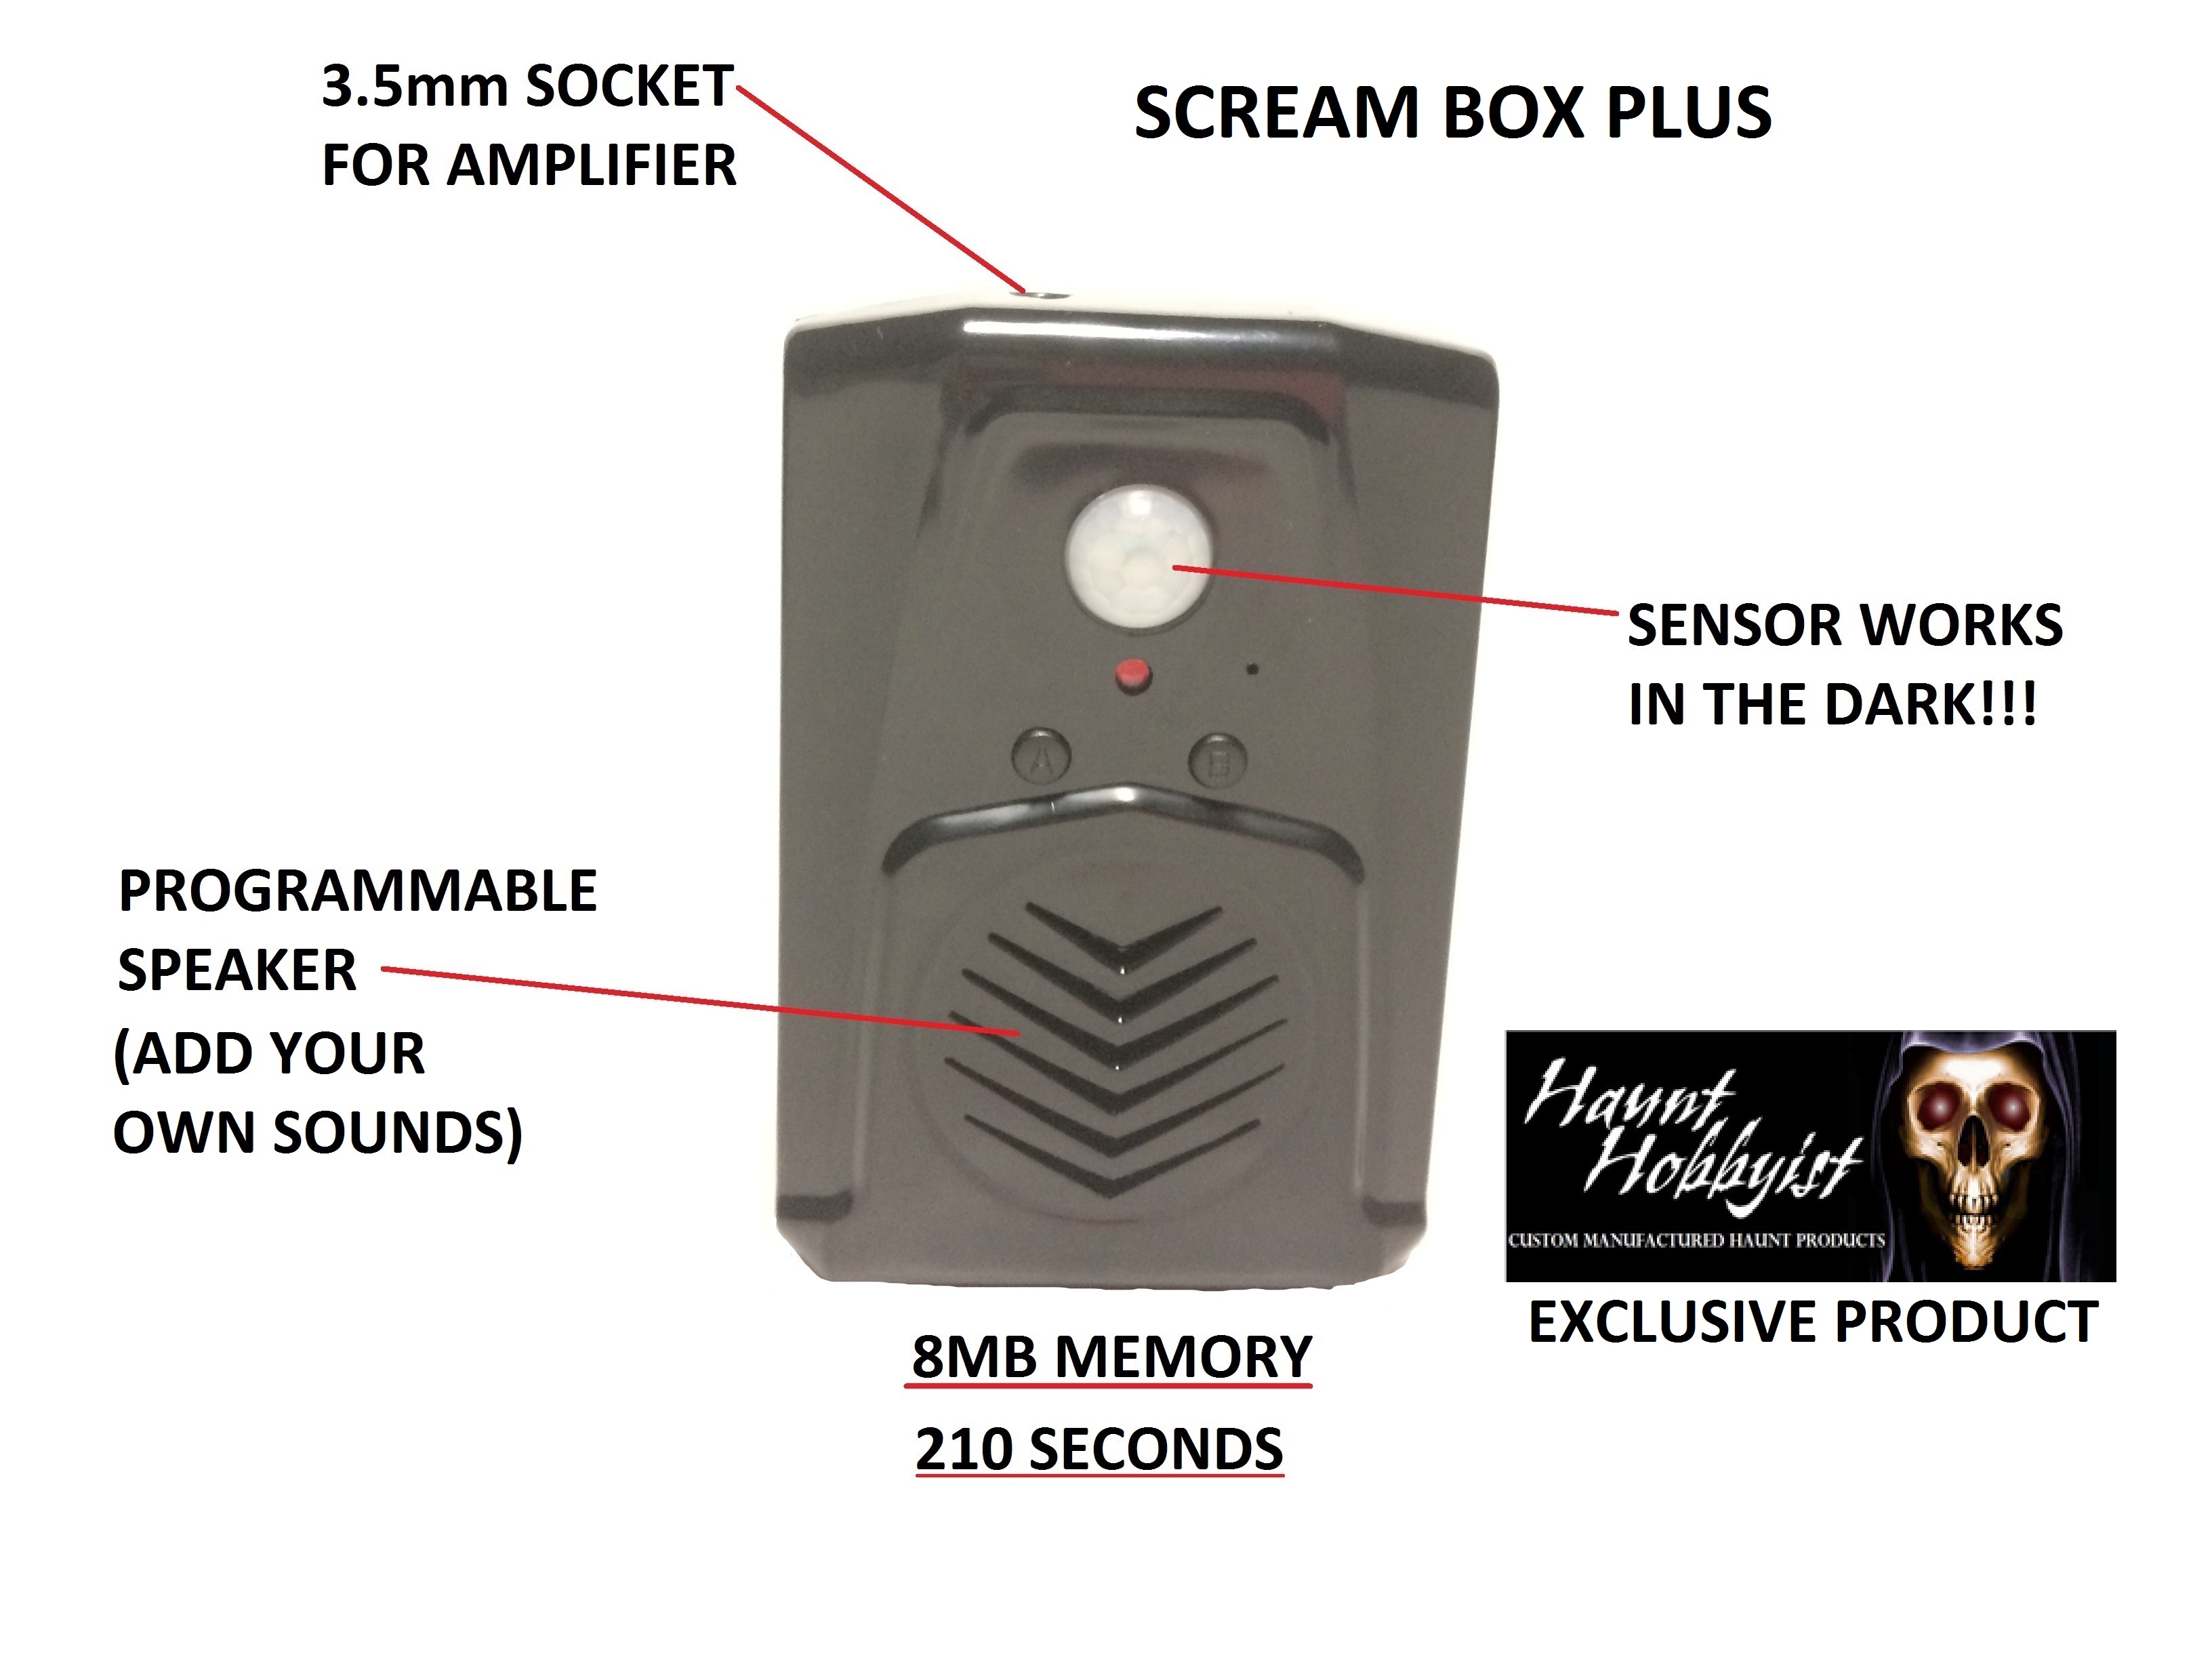 Scream box12logo2.jpg